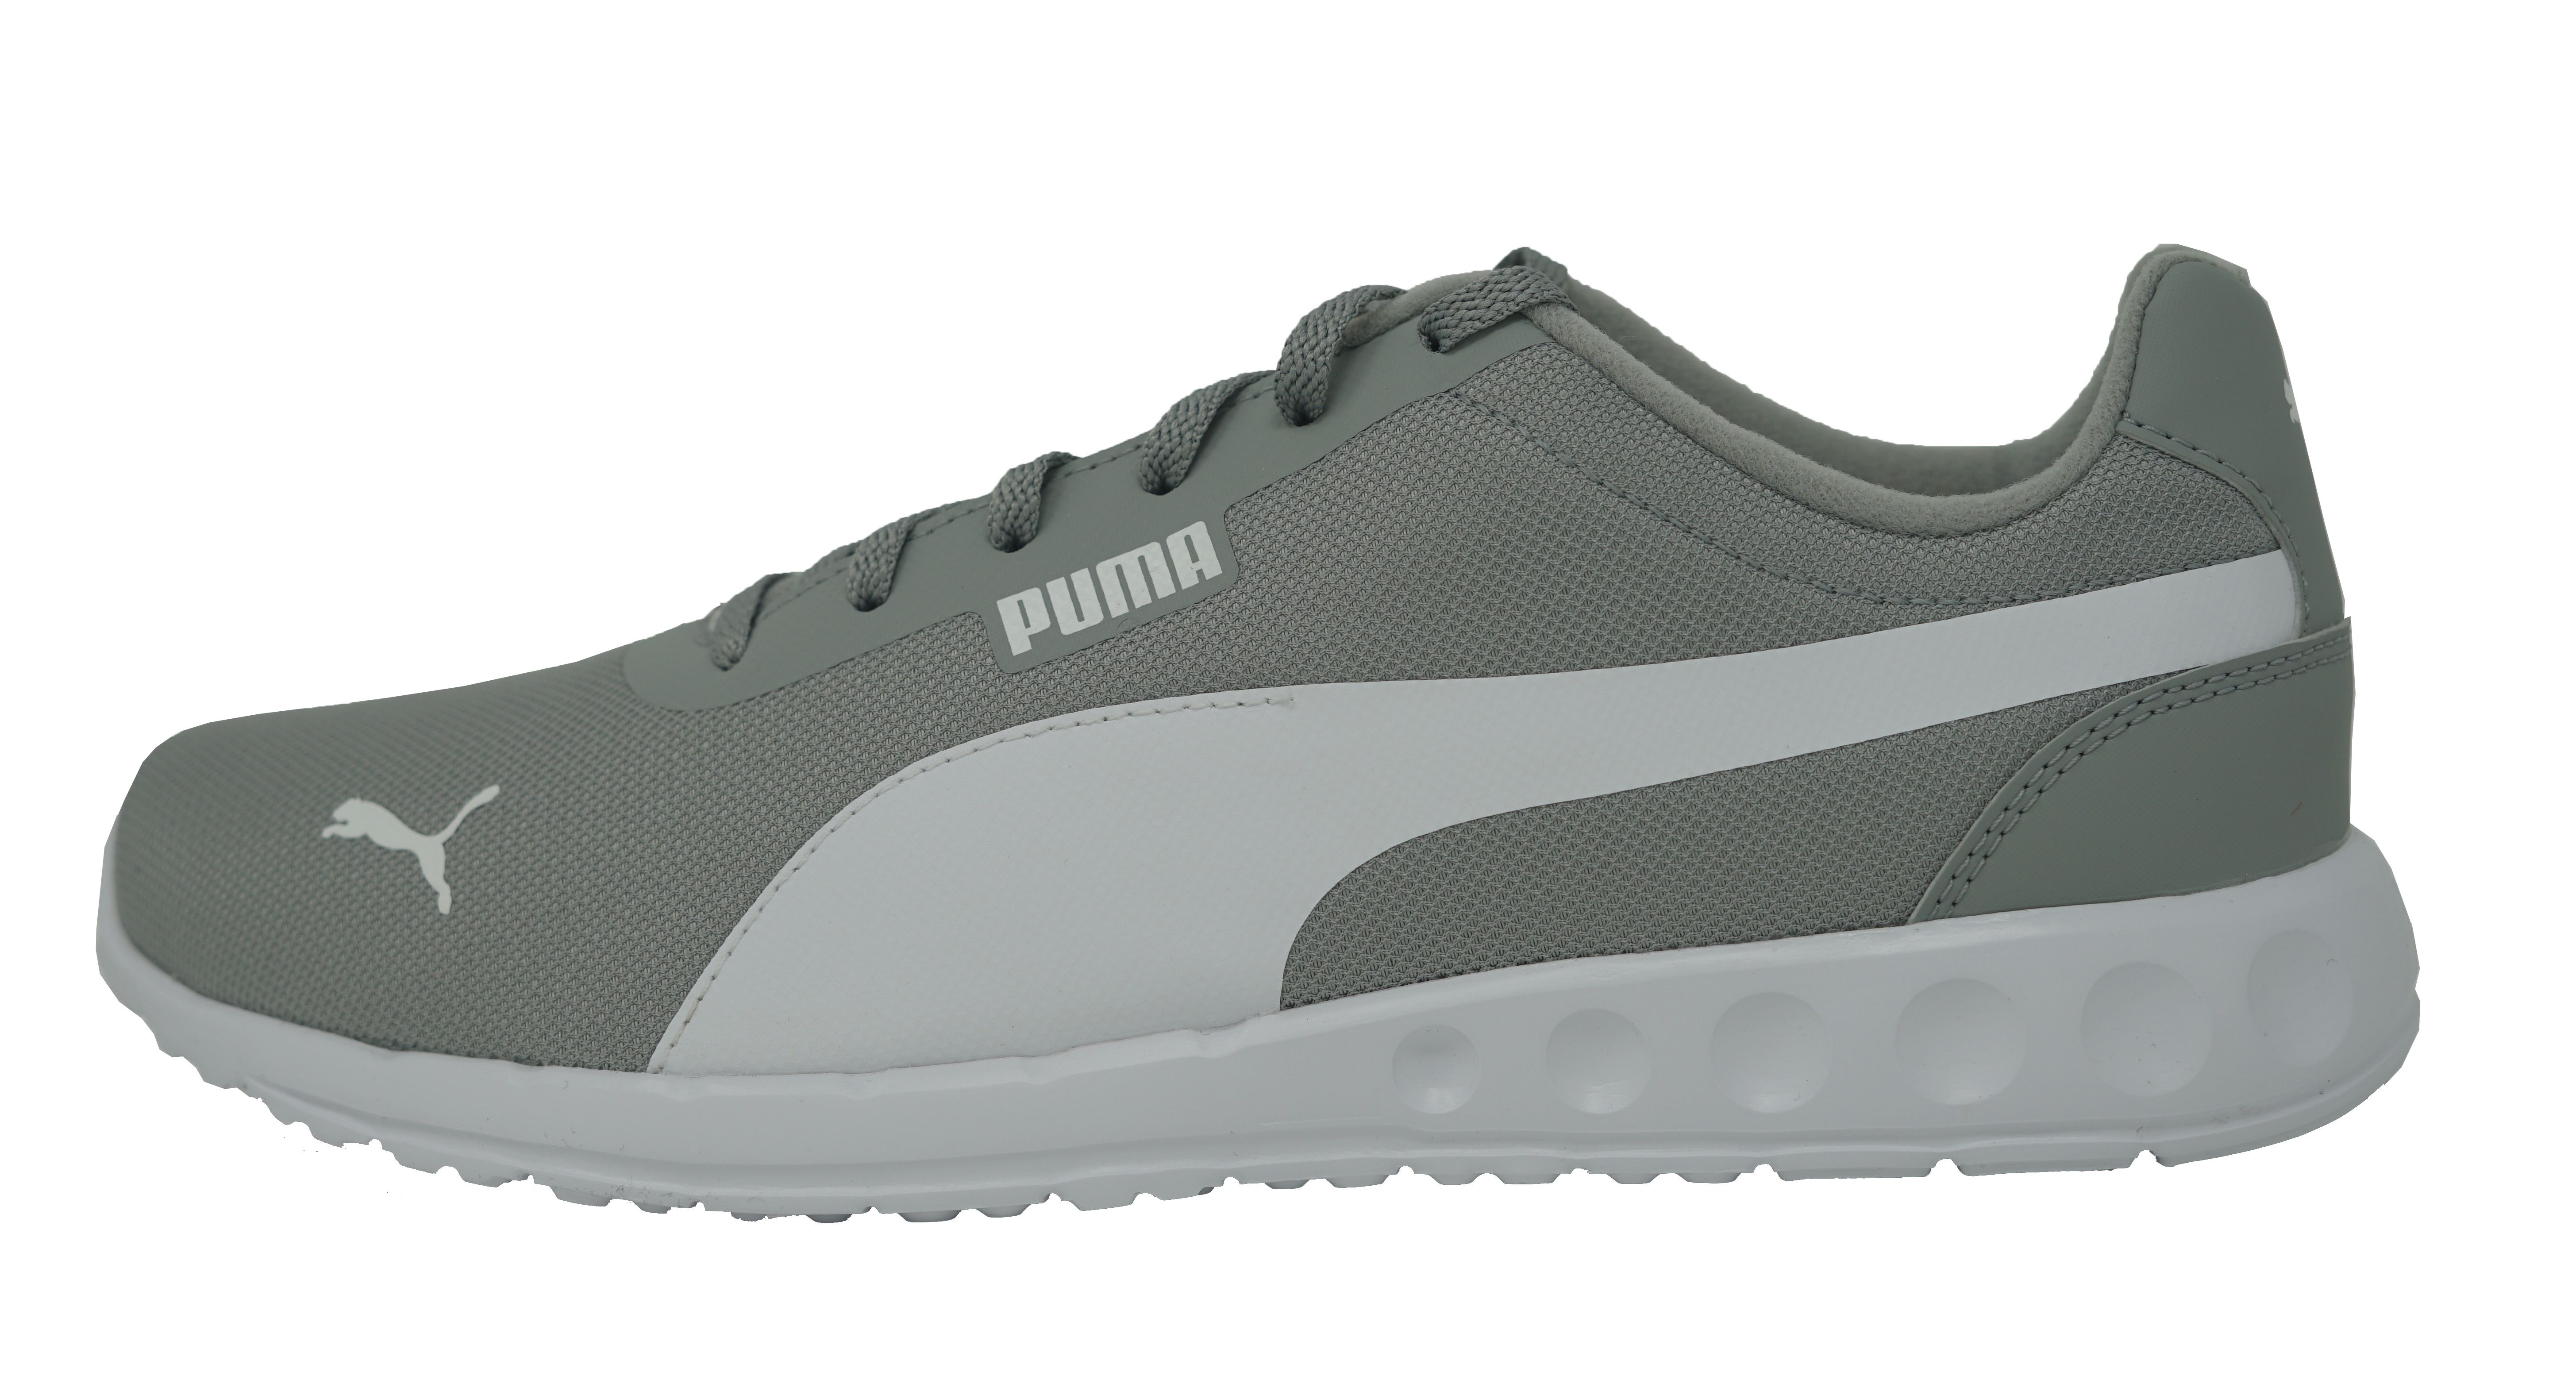 Puma FALLON 188274 02 Trainers. Running Trainers. 100% Nylon Upper Sneakers. Rubber Sole. Lace Fasten. IGNITE Foam Technology